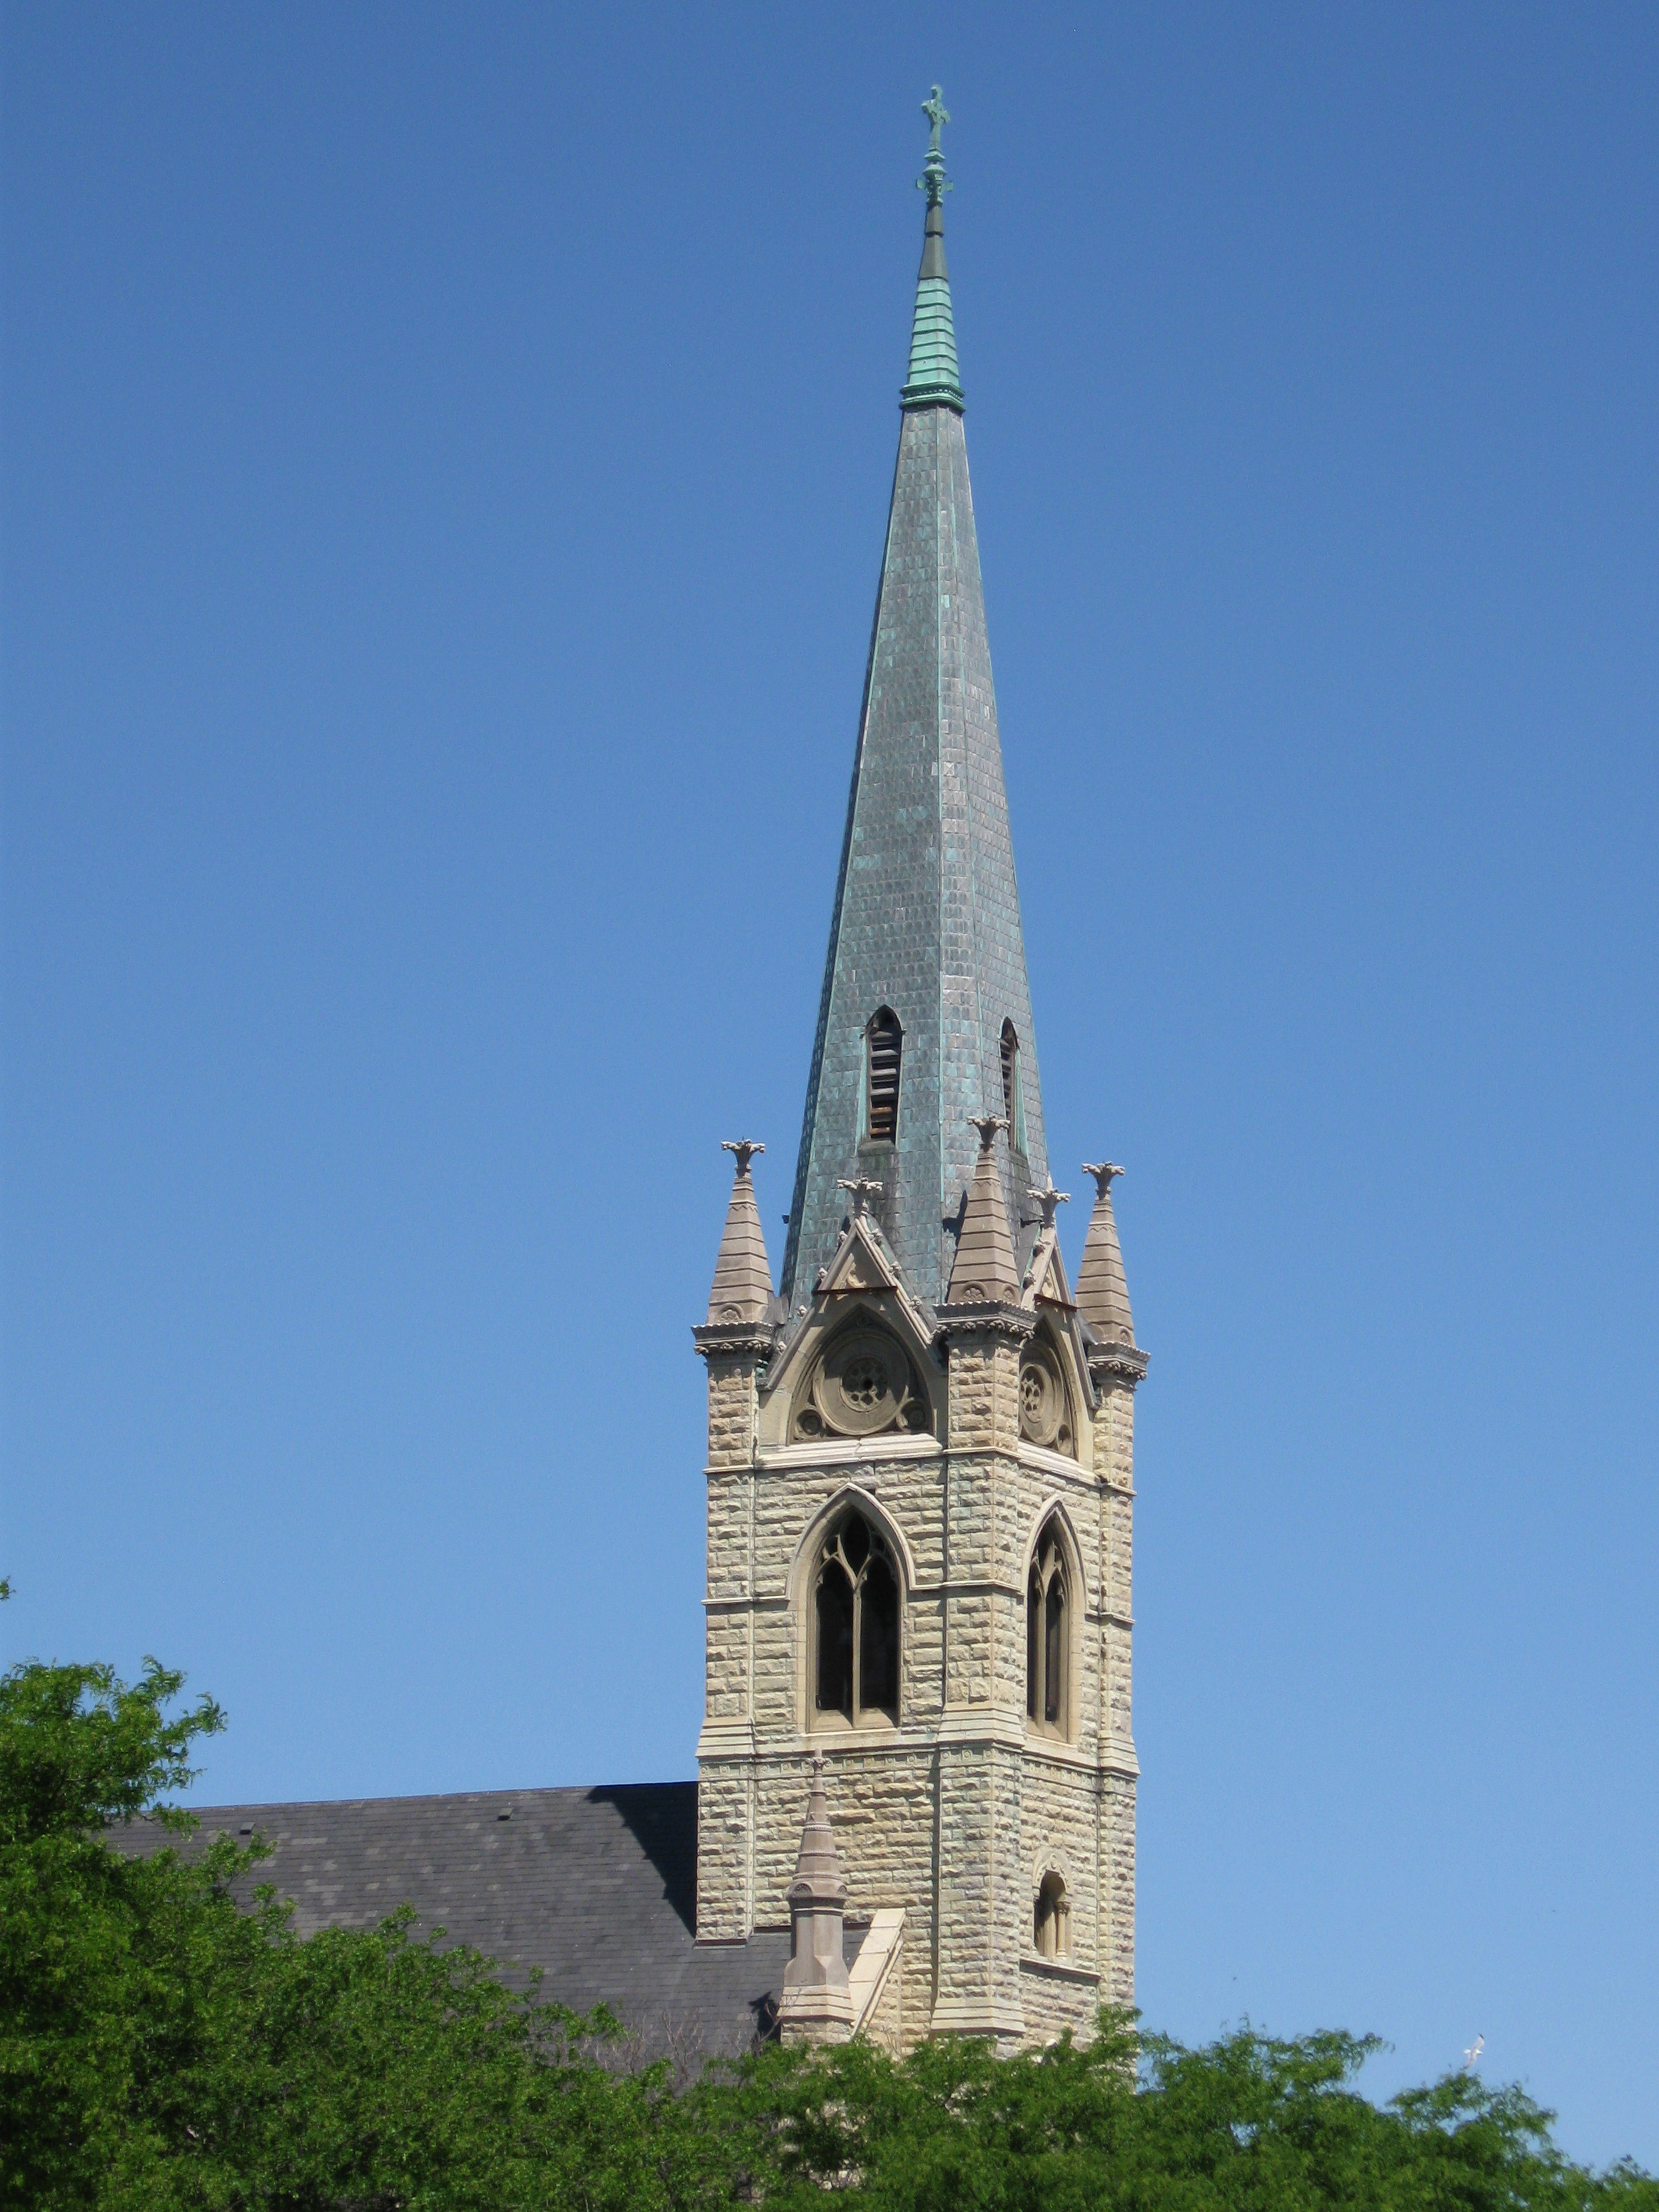 File:Steeple of St James Catholic Church.jpg - Wikimedia Commons